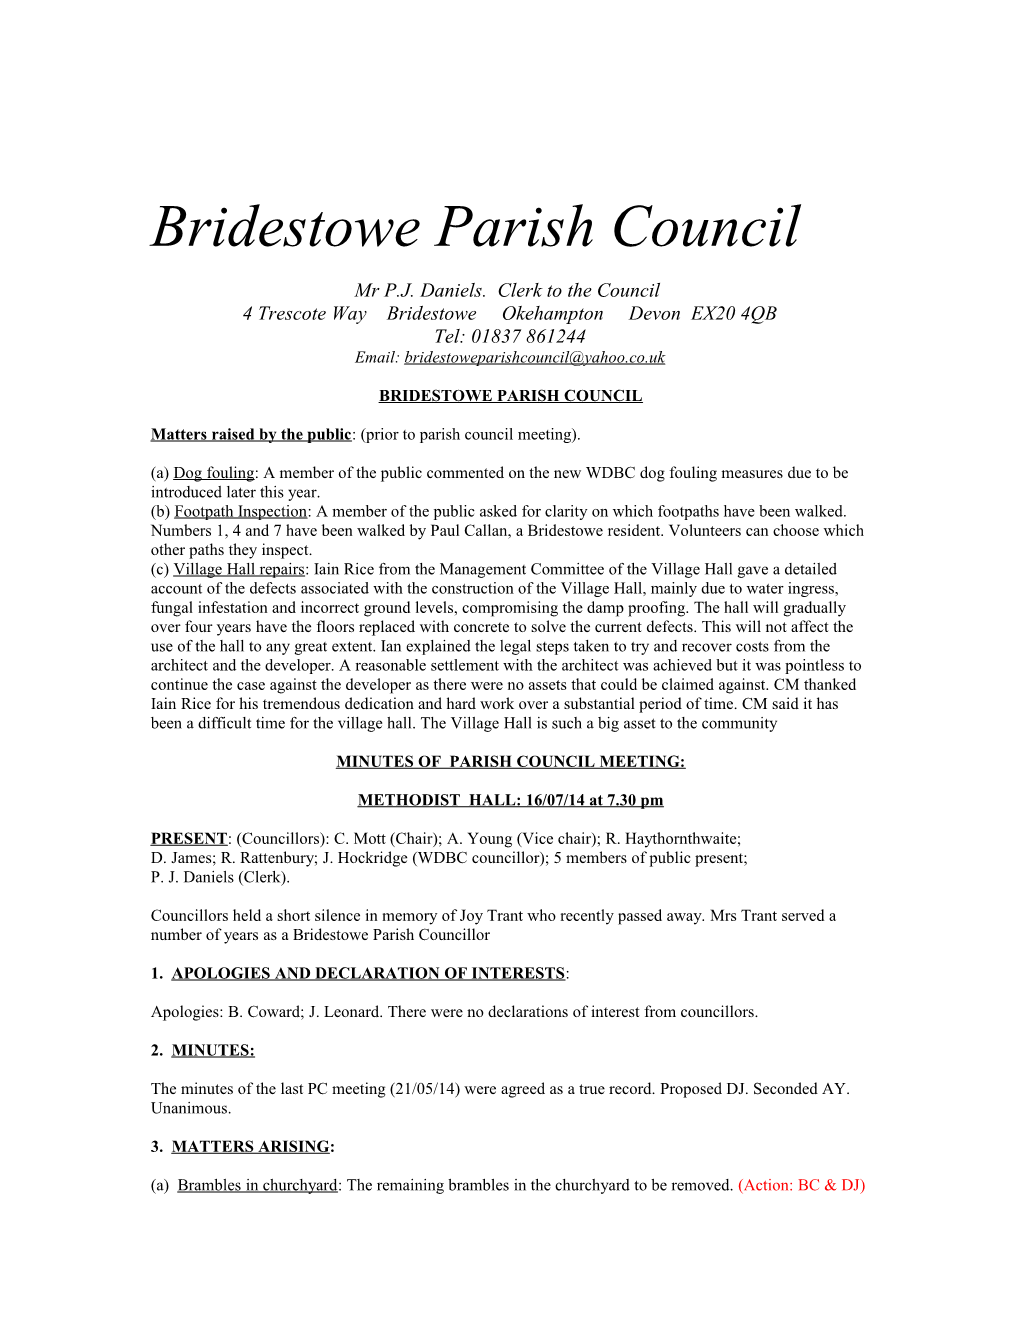 Bridestowe Parish Council s2